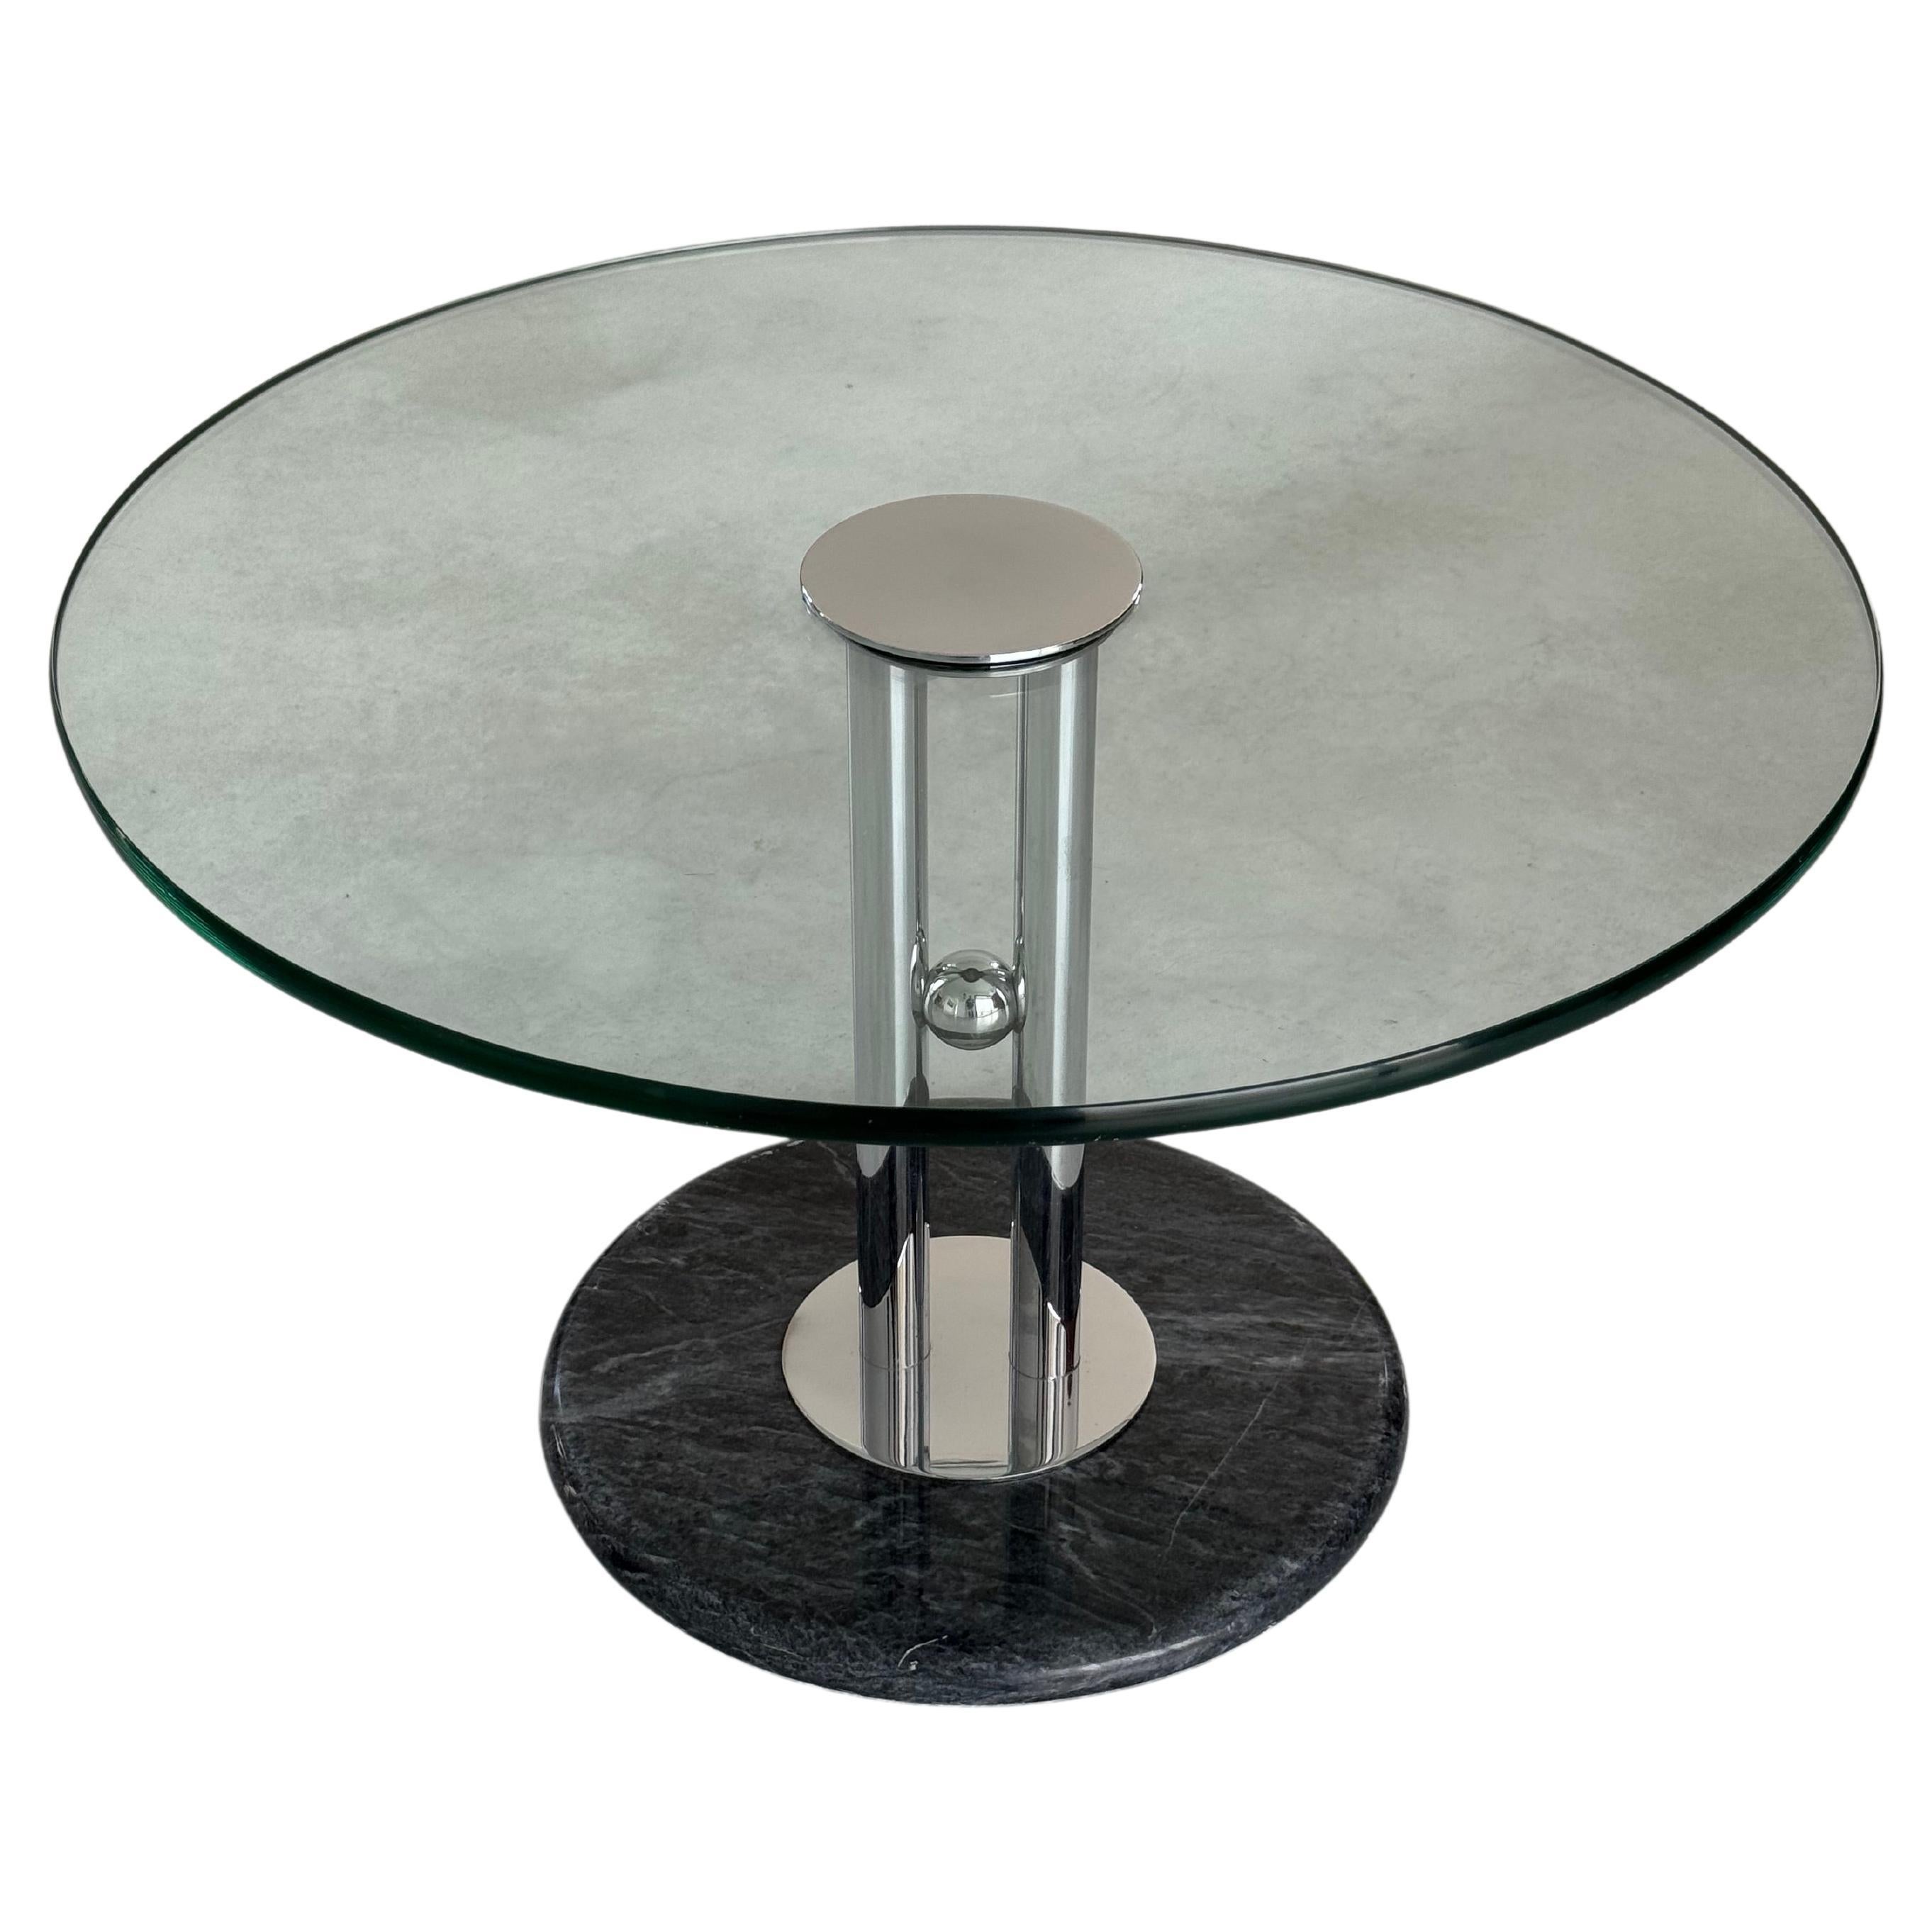 Table basse postmoderne en marbre et verre, design italien, vers les années 1980 en vente